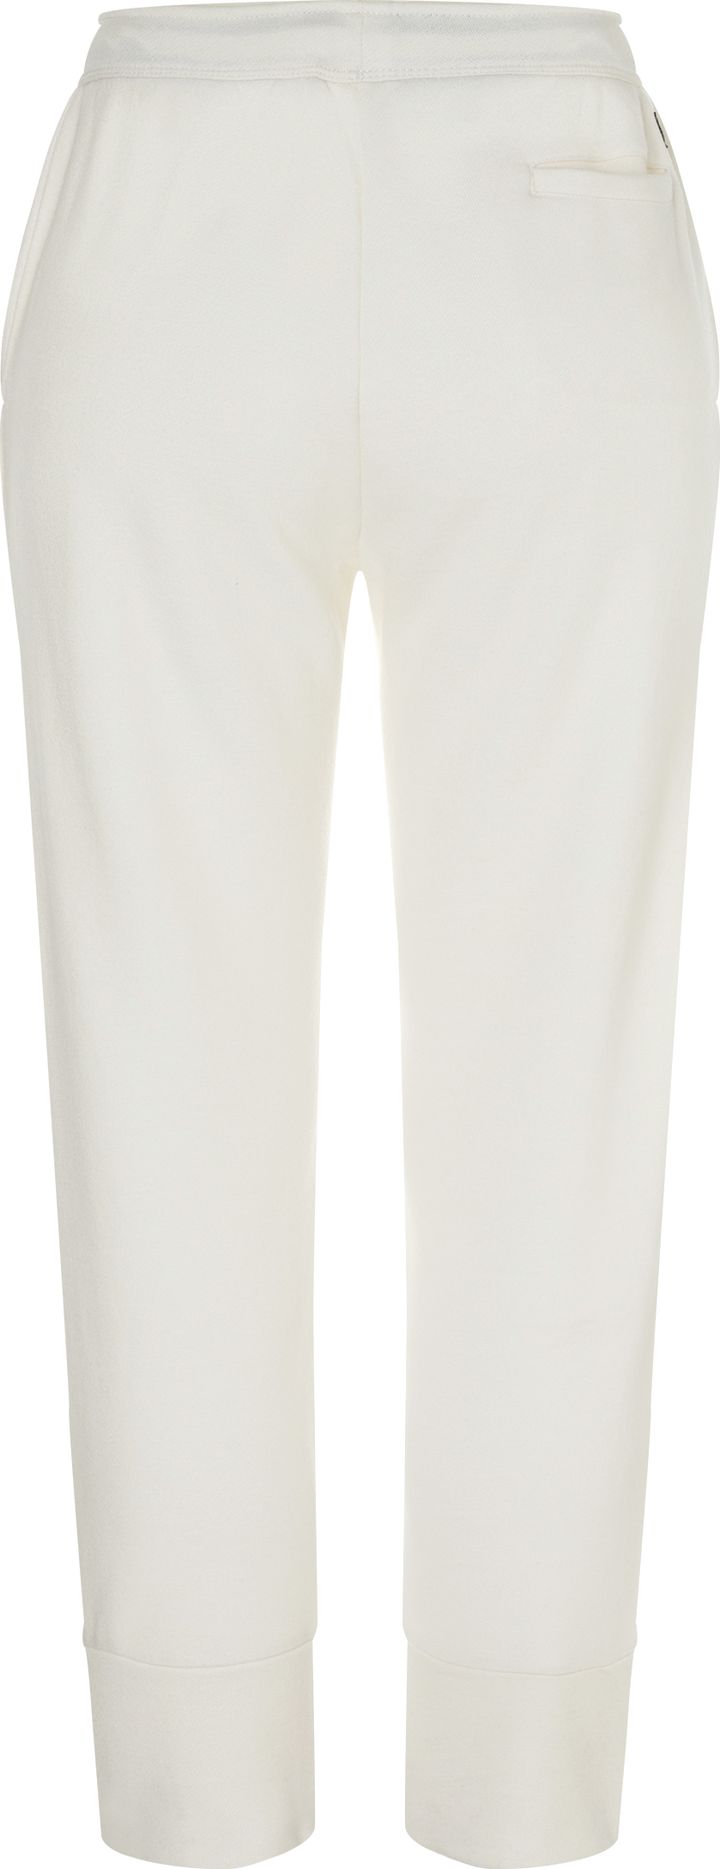 Women's Knit Pant Fresh White super.natural